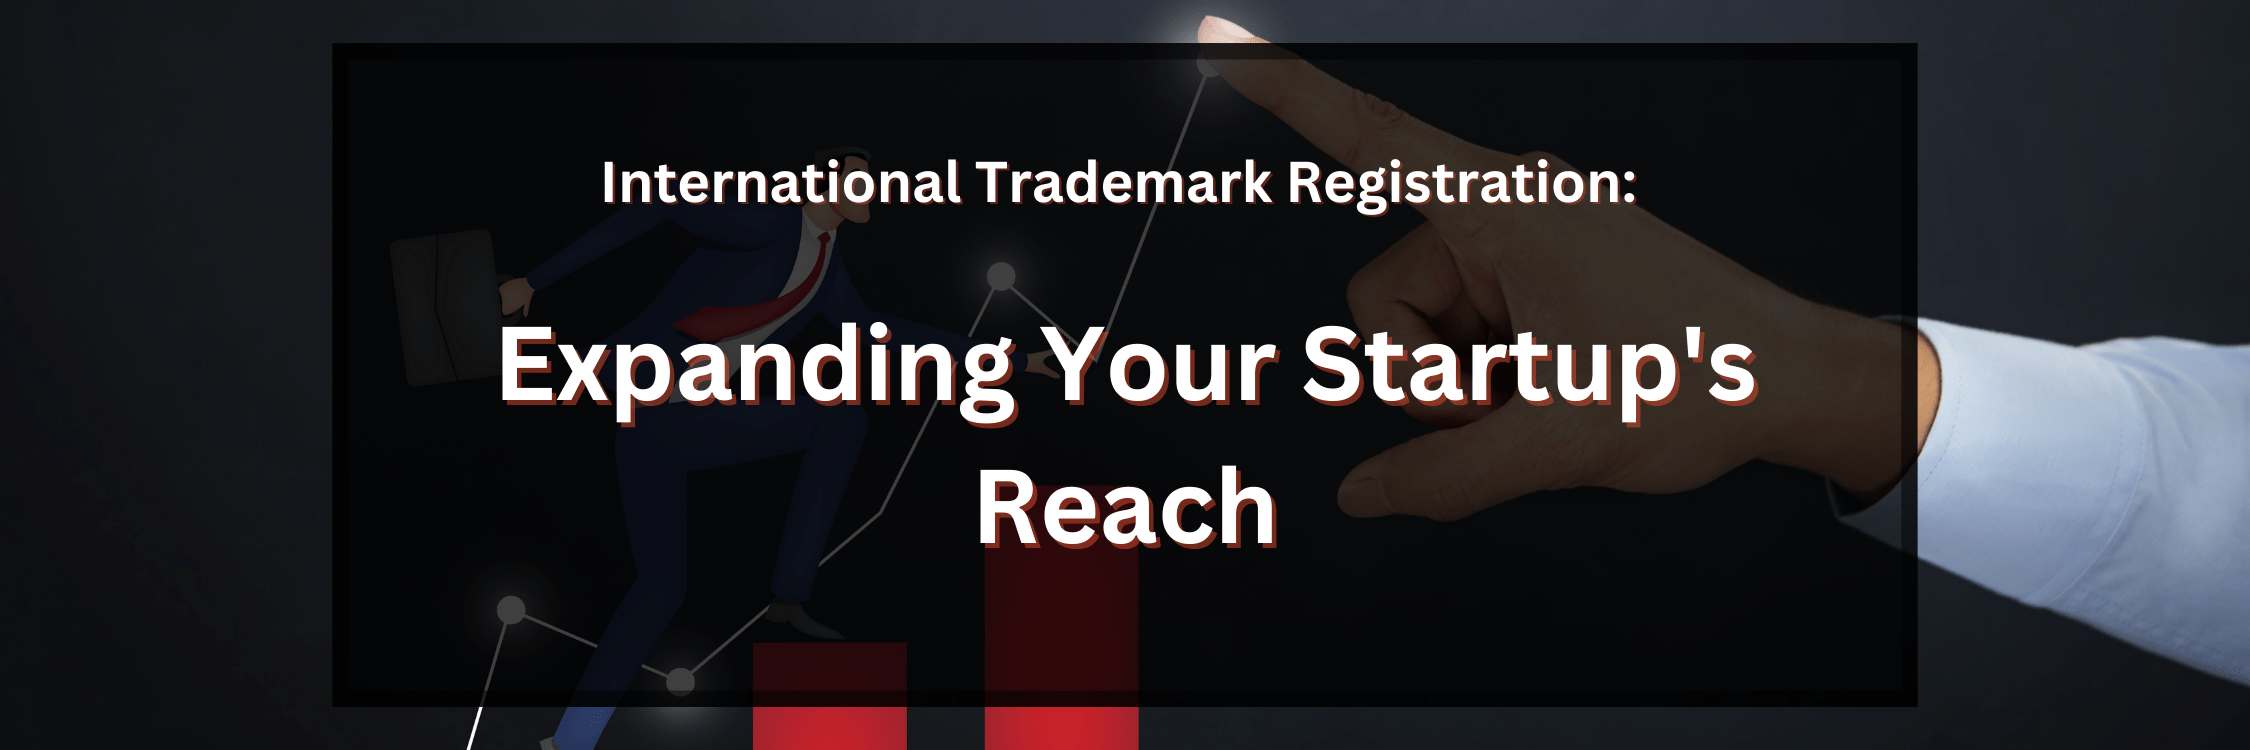 International Trademark Registration Expanding Your Startups Reach